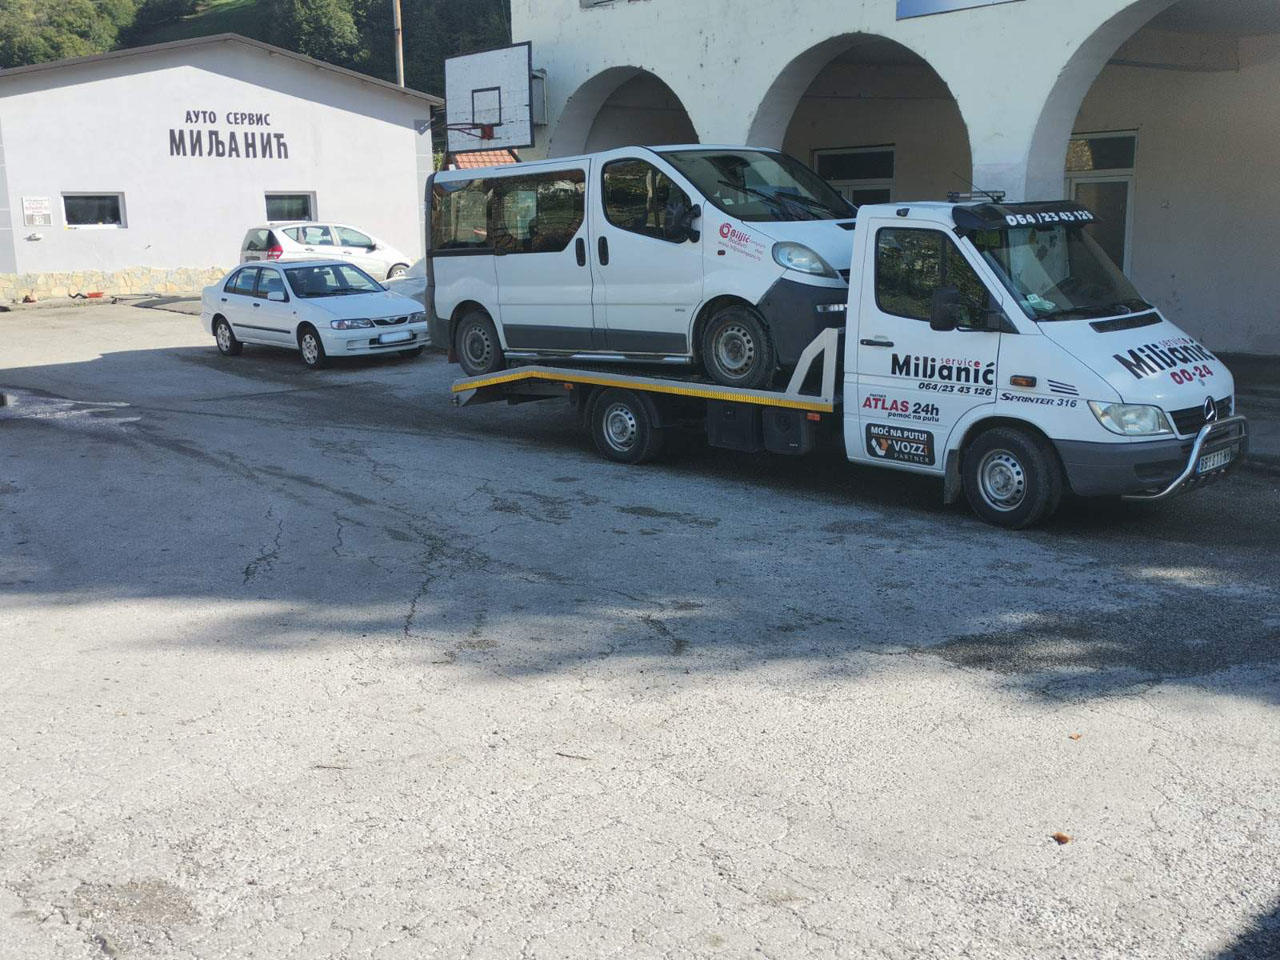 Photo 4 - TOWING SERVICE MILJANIC - Auto services, Bajina Basta